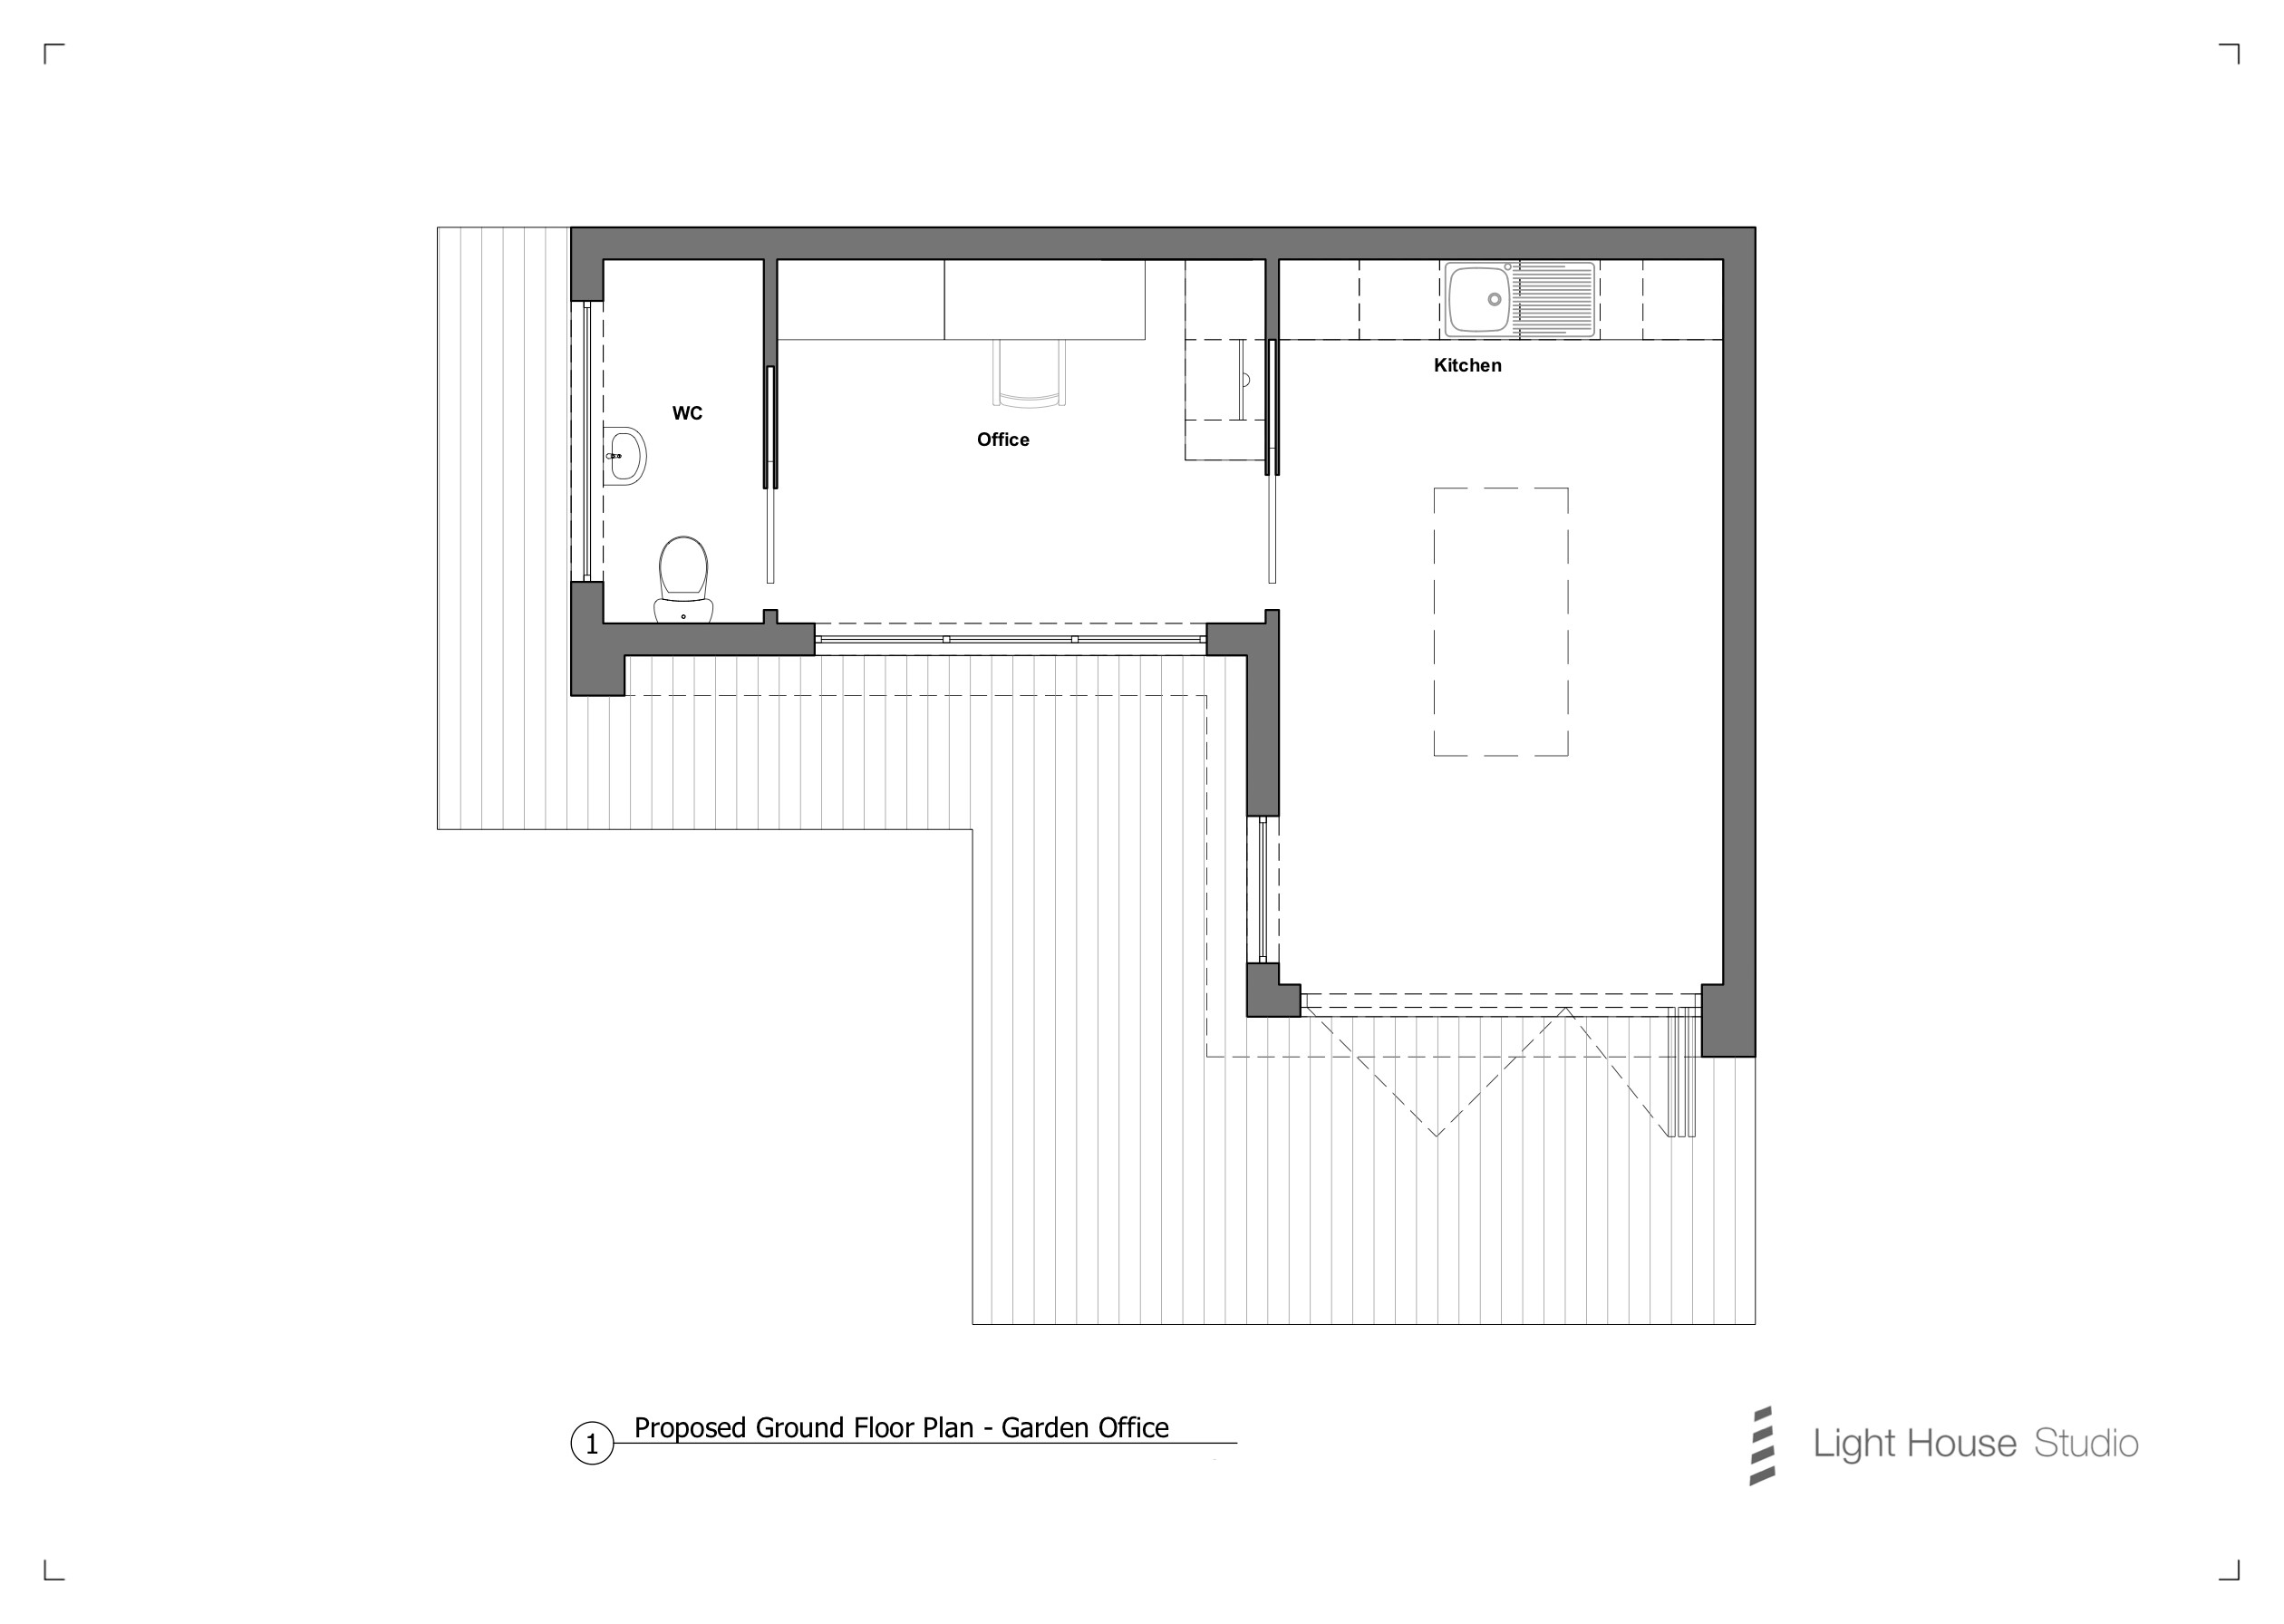 Proposed Ground Floor Plan, Garden office